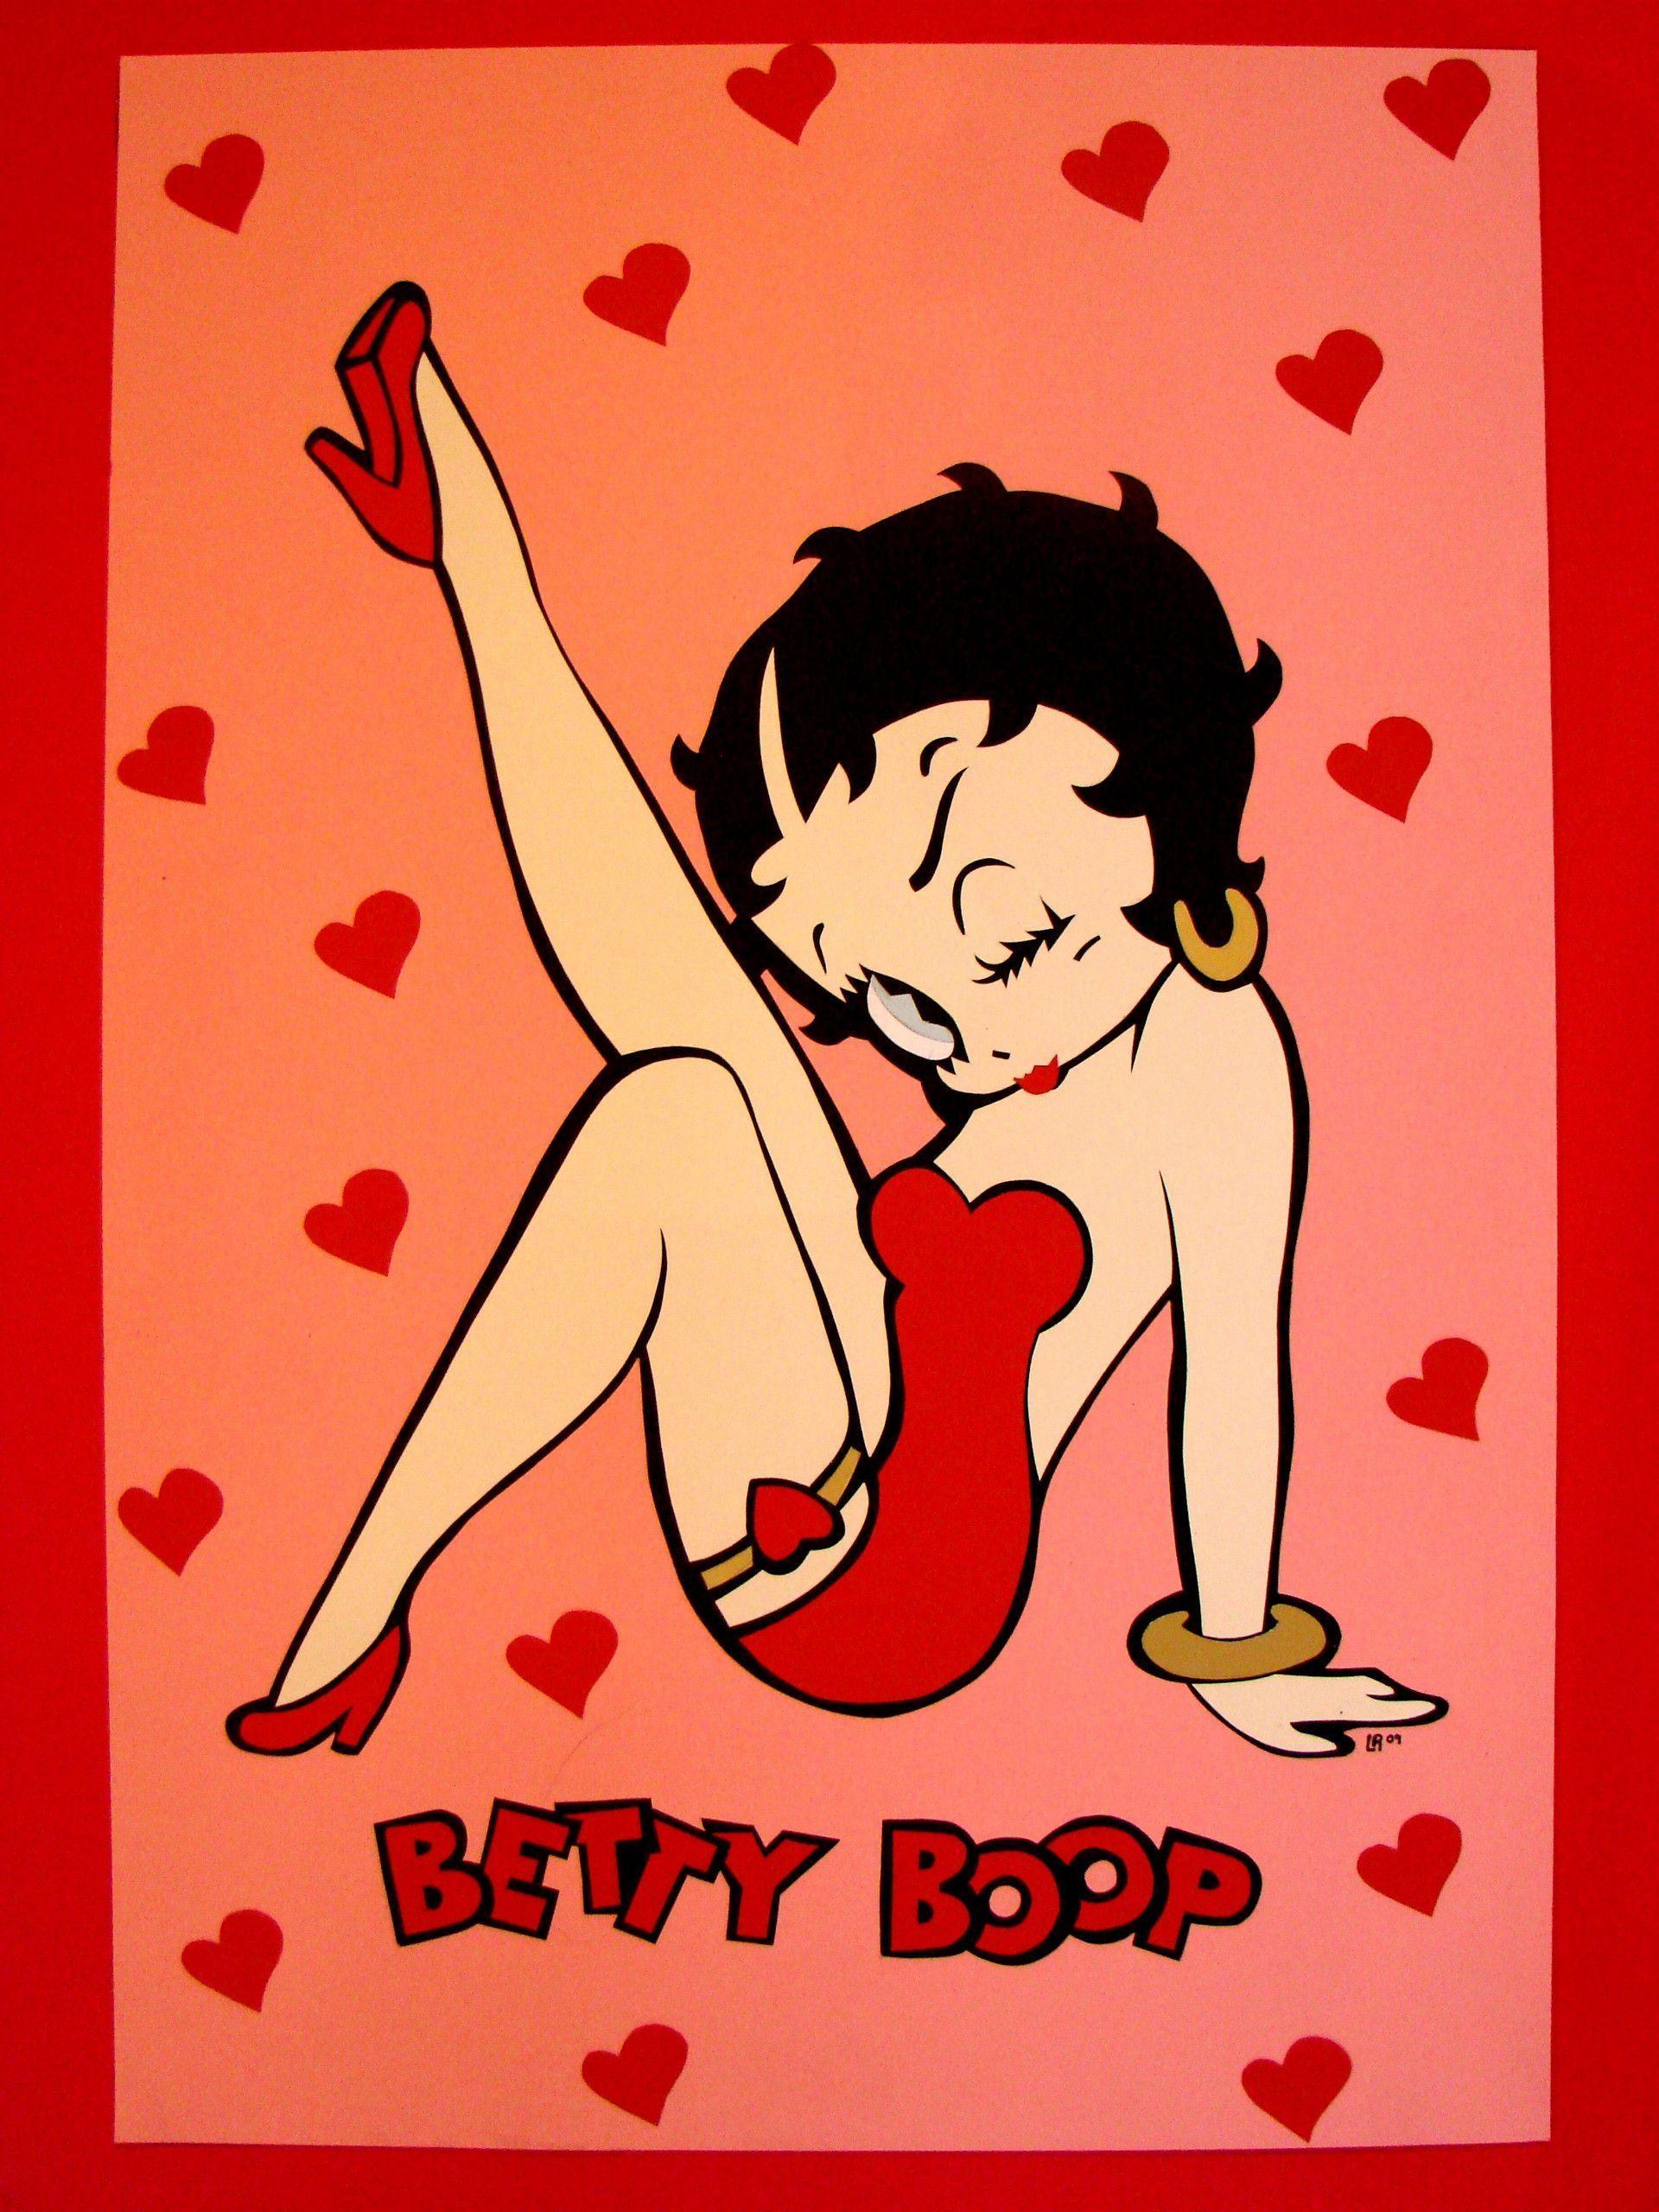 Fine 100% Quality HD Pics of Betty Boop, Full HD 1080p Desktop Pics